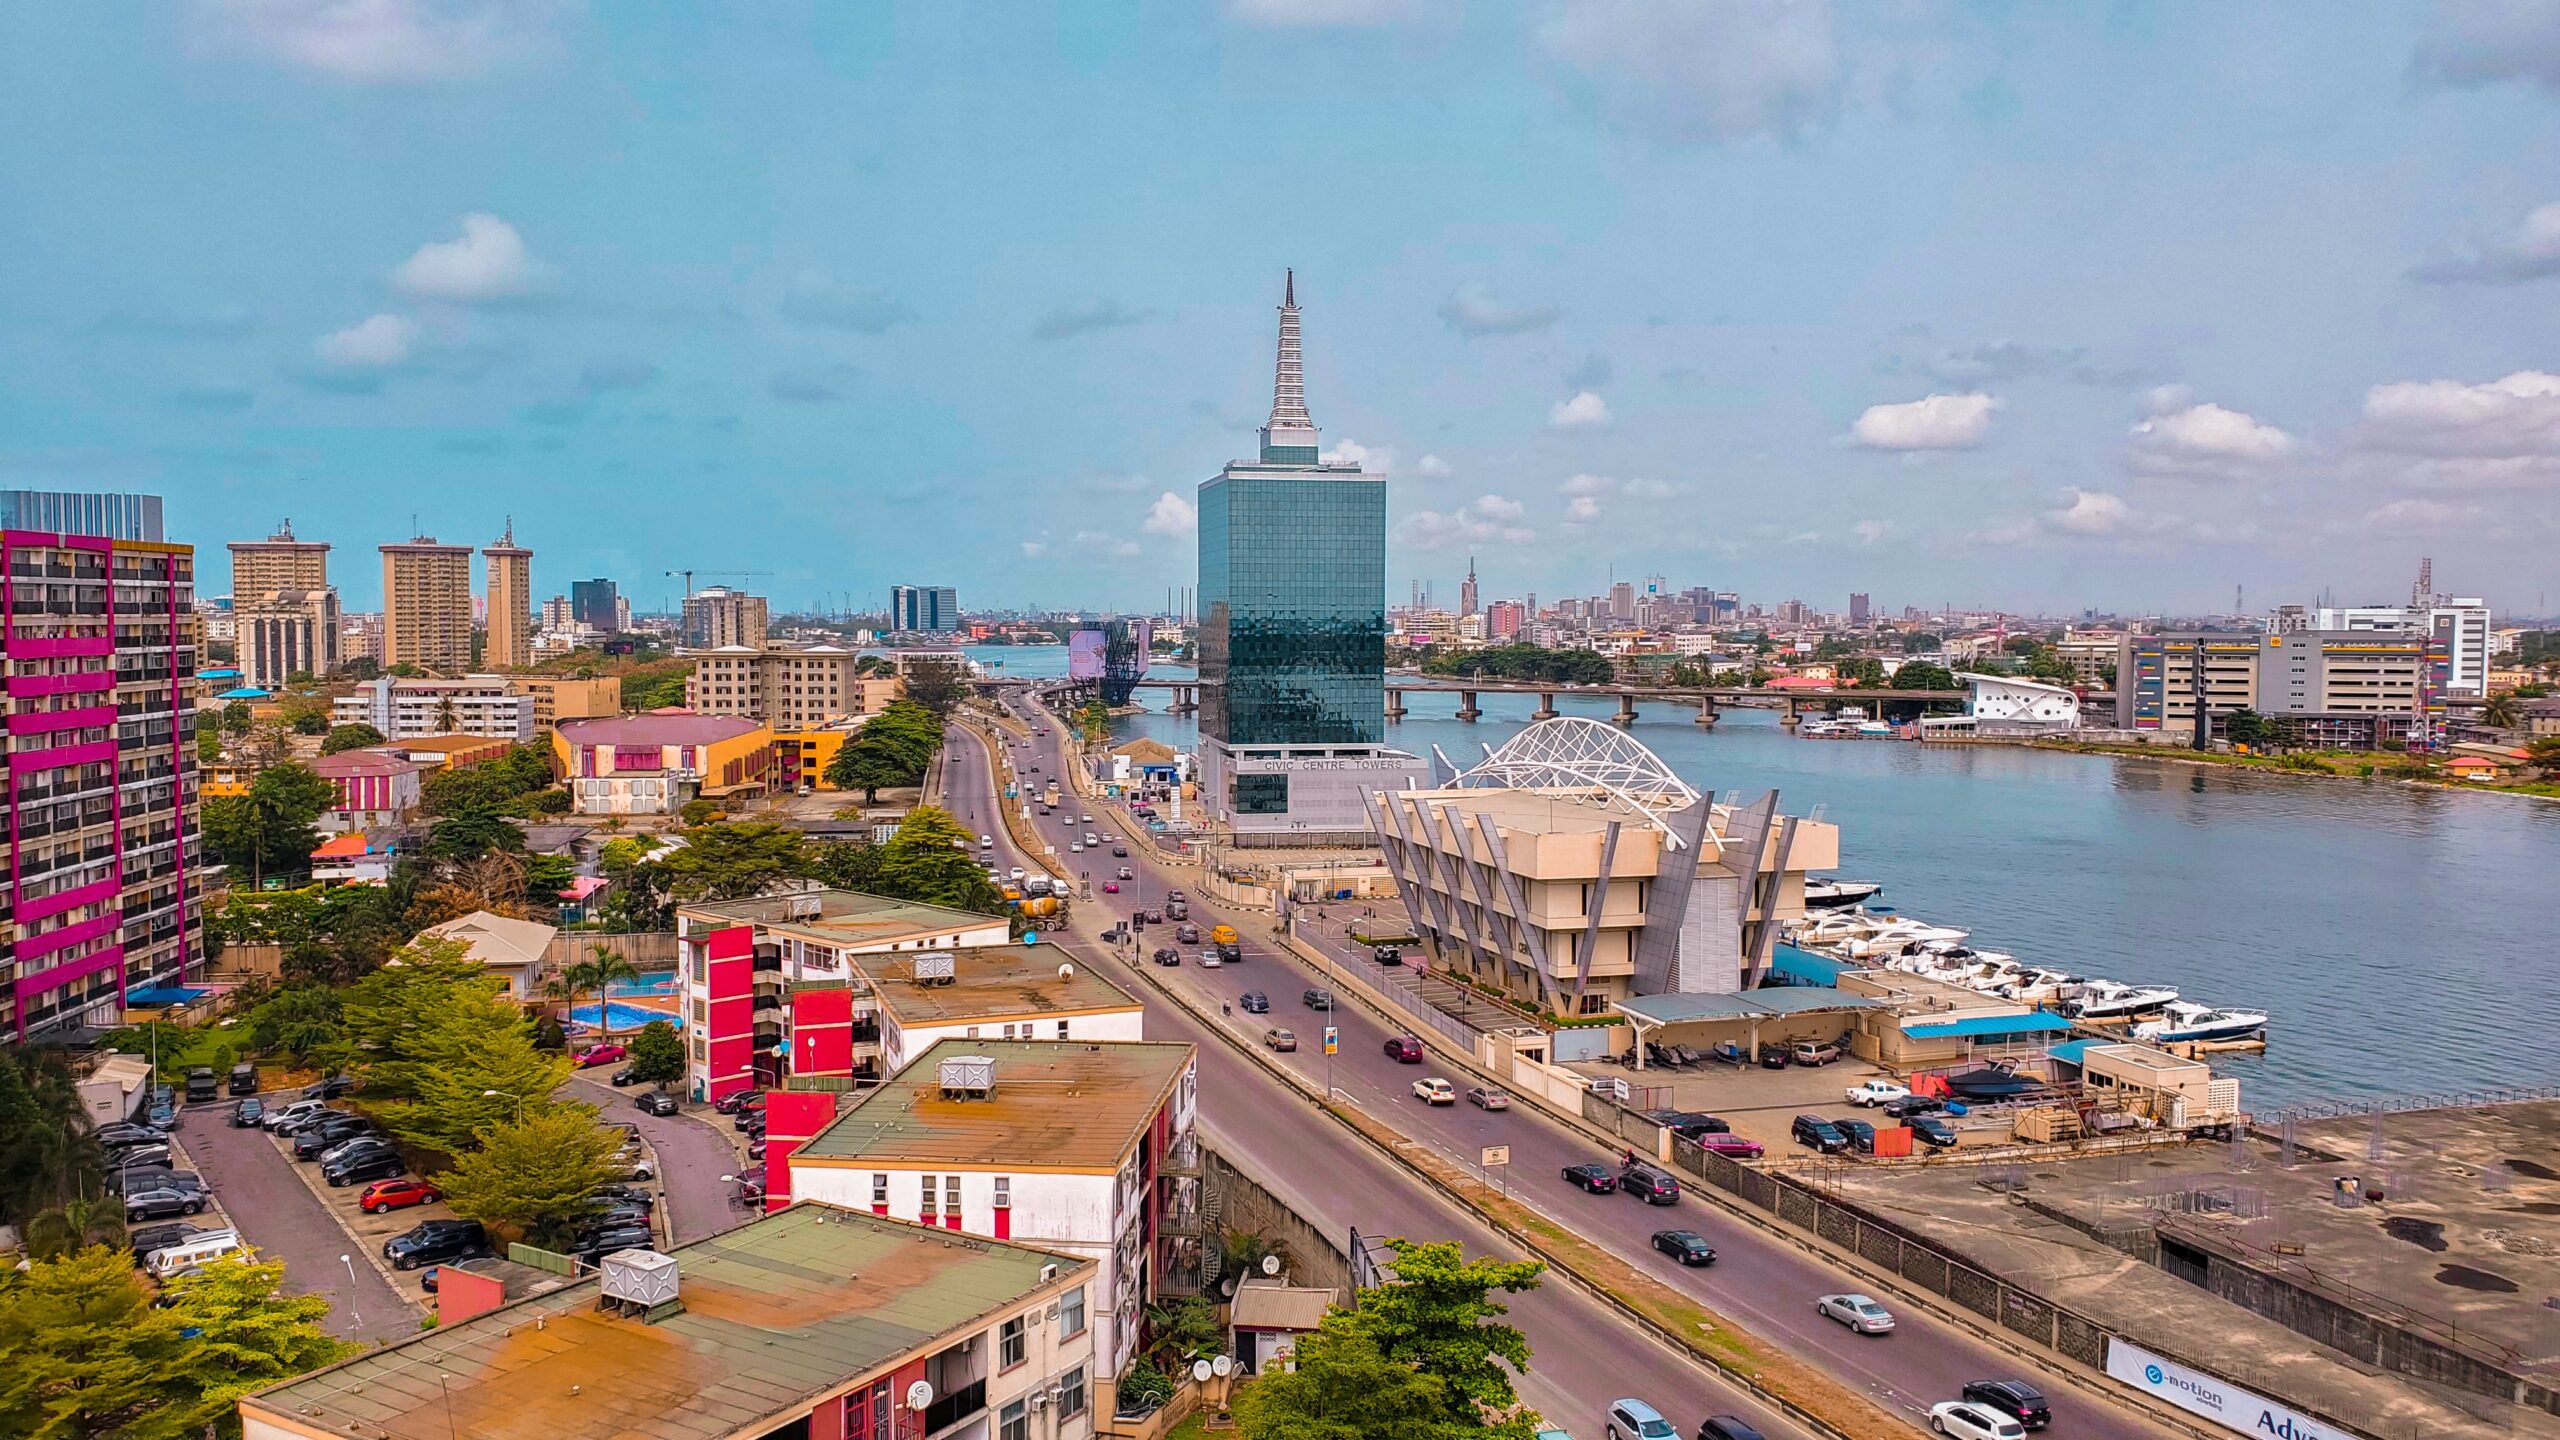 Lagos city